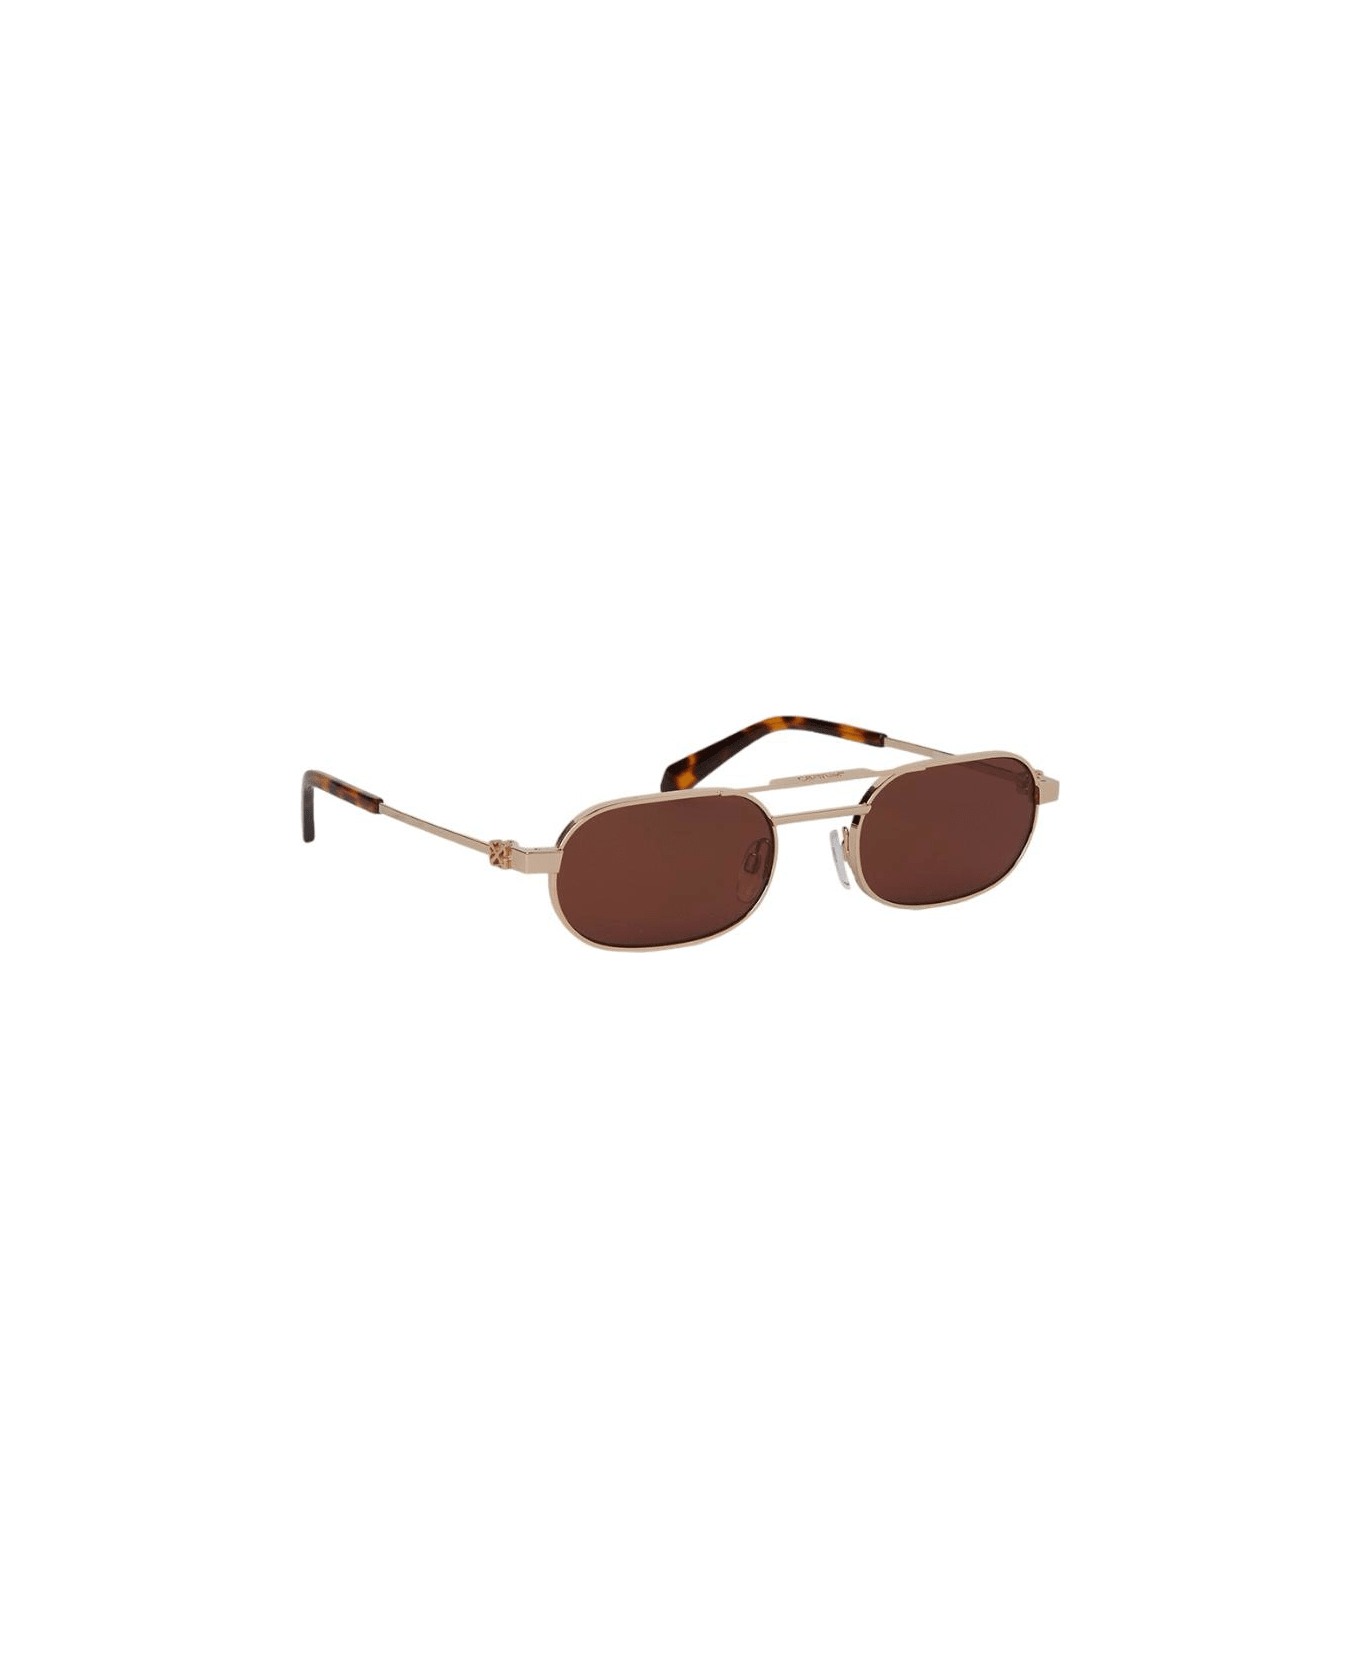 Off-White Vaiden - Oeri123 Sunglasses